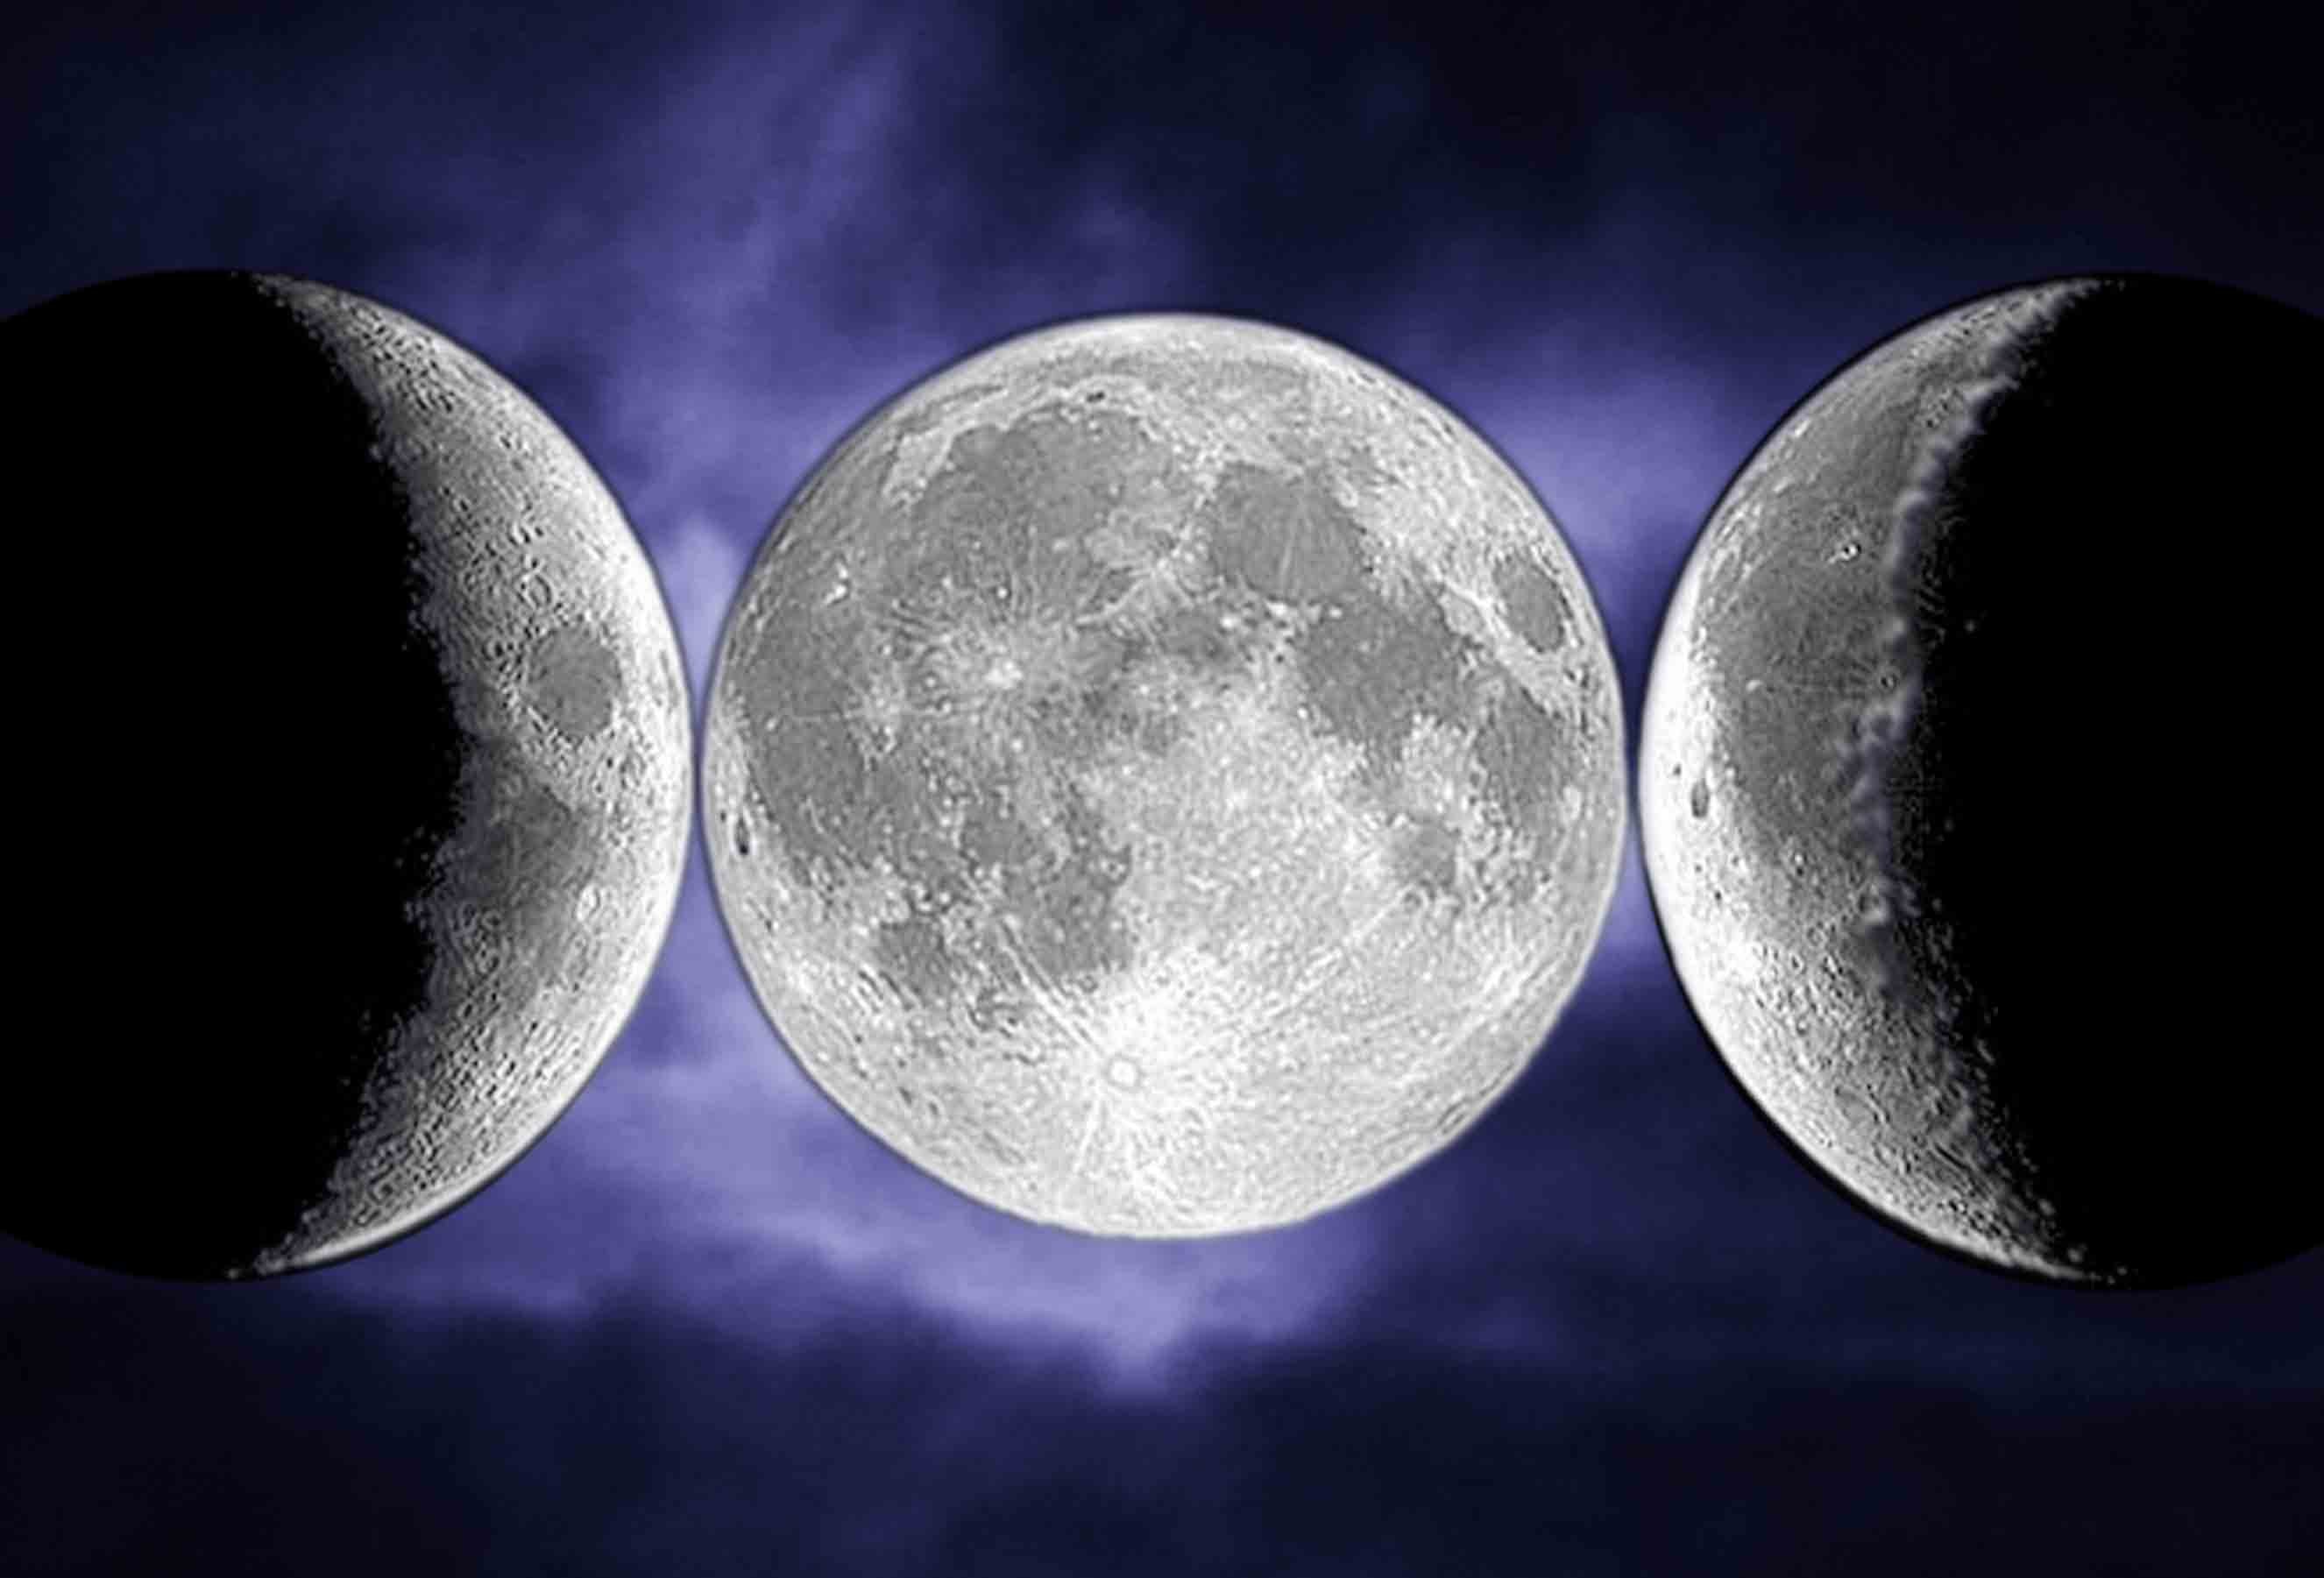 2652x1801 Similiar Wicca Moon Keywords